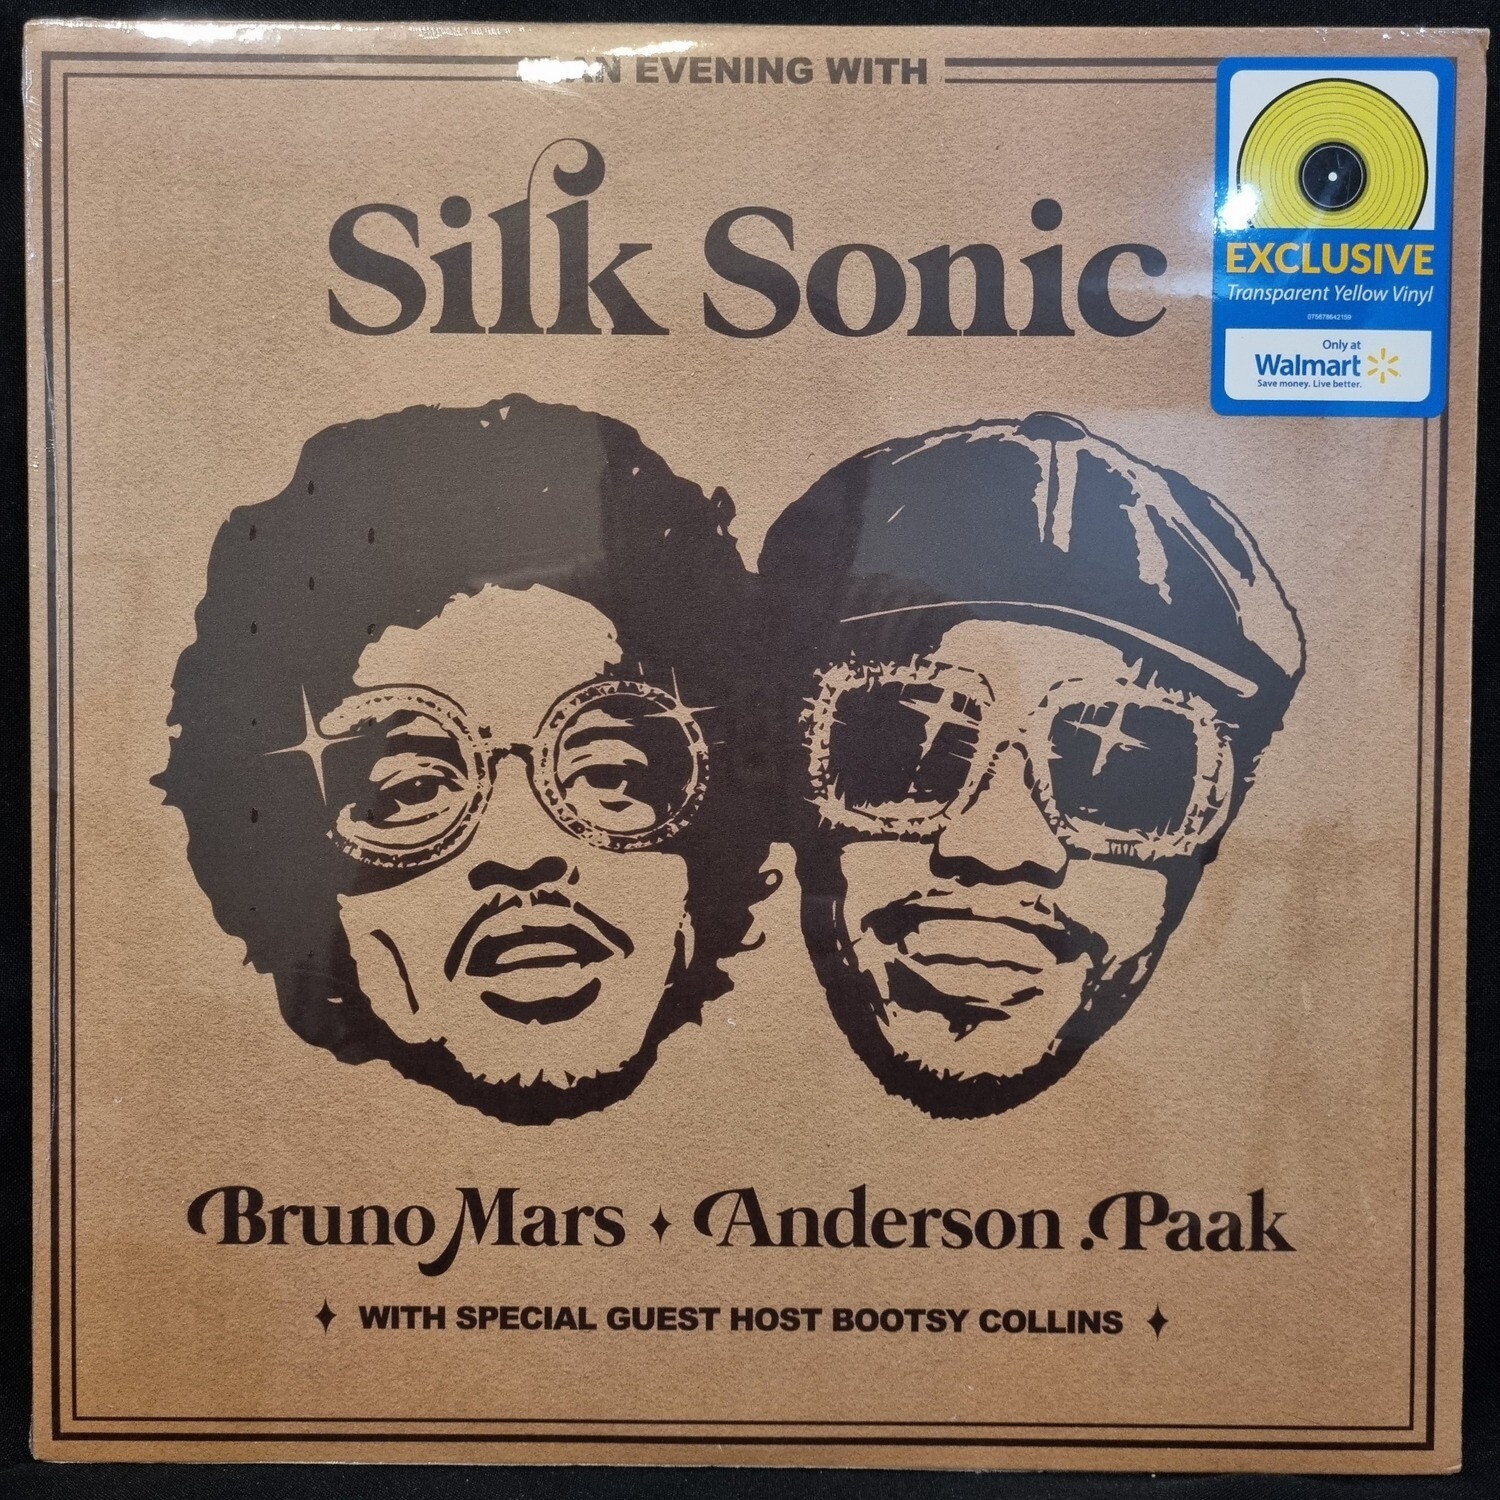 Silk Sonic (Bruno Mars & Anderson Paak)- An Evening with Silk Sonic (Yellow vinyl)